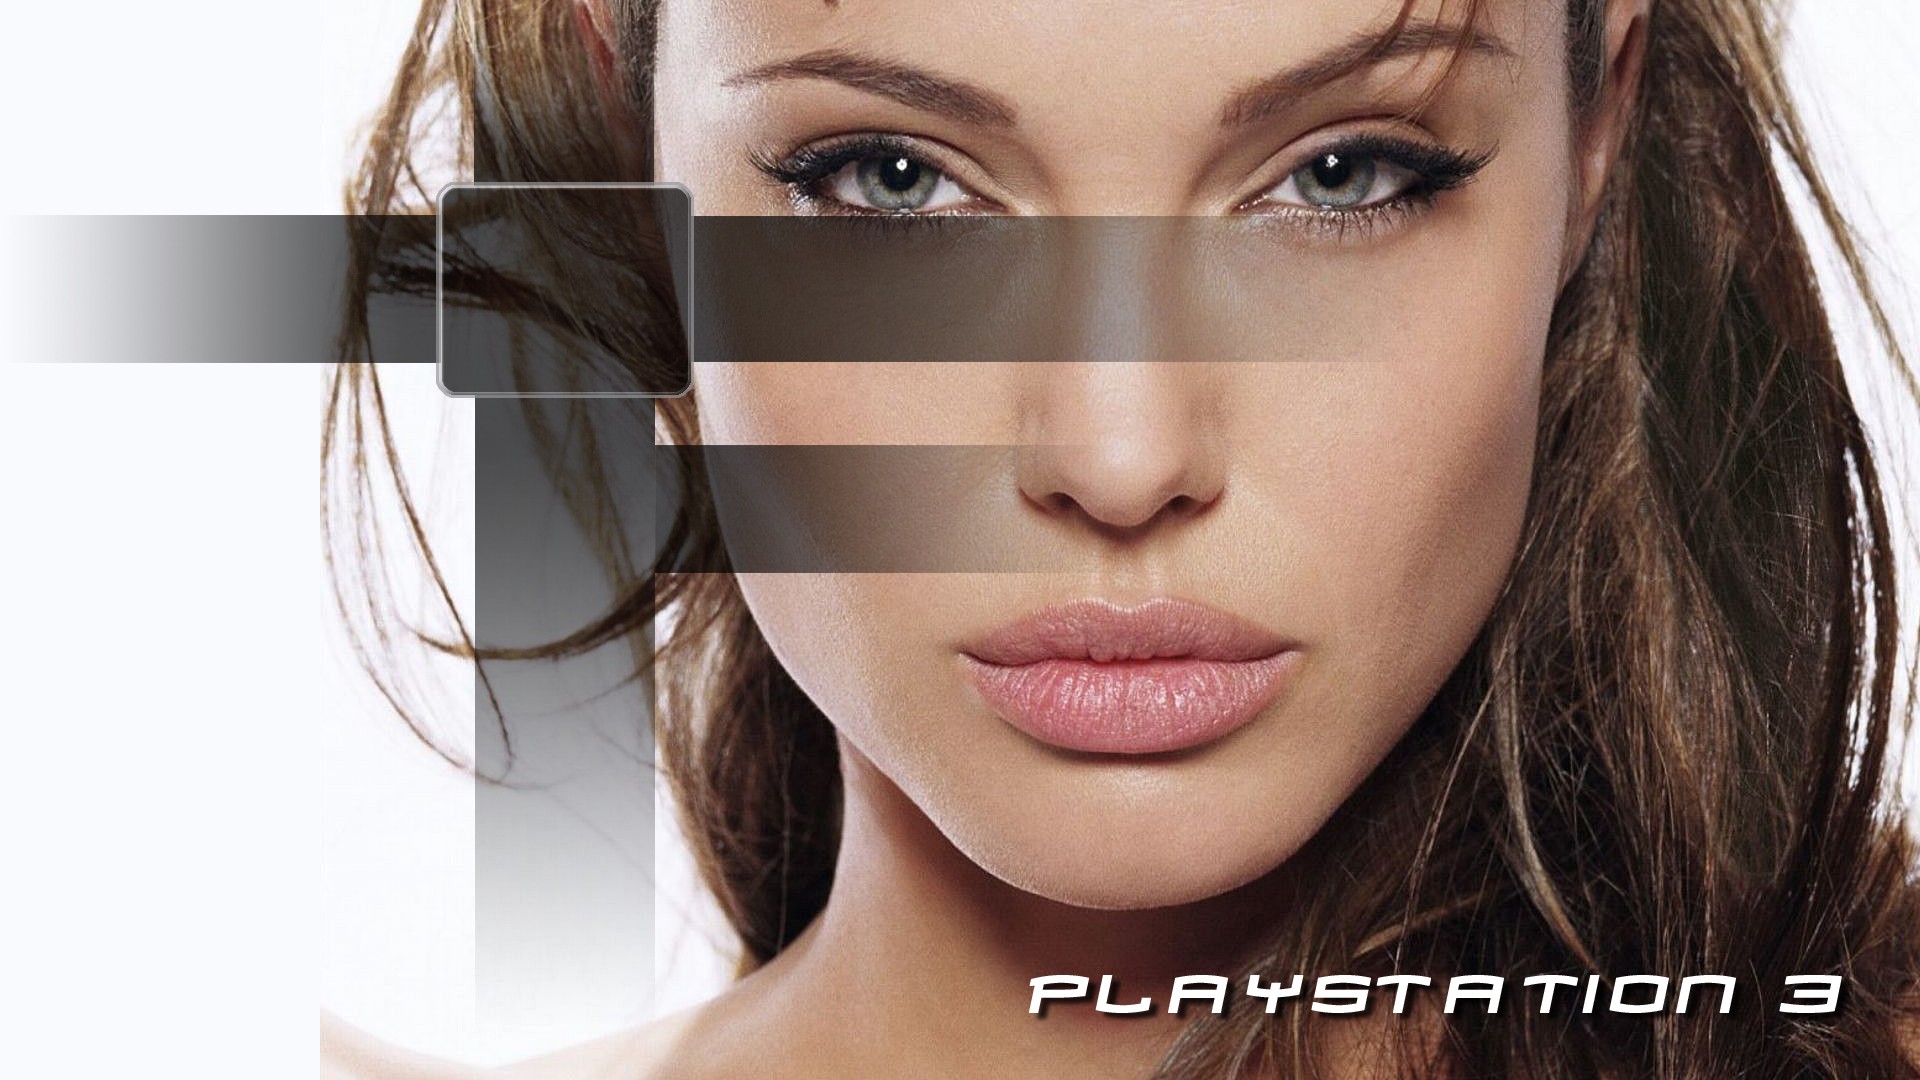 women, Angelina Jolie, Playstation 3 - desktop wallpaper